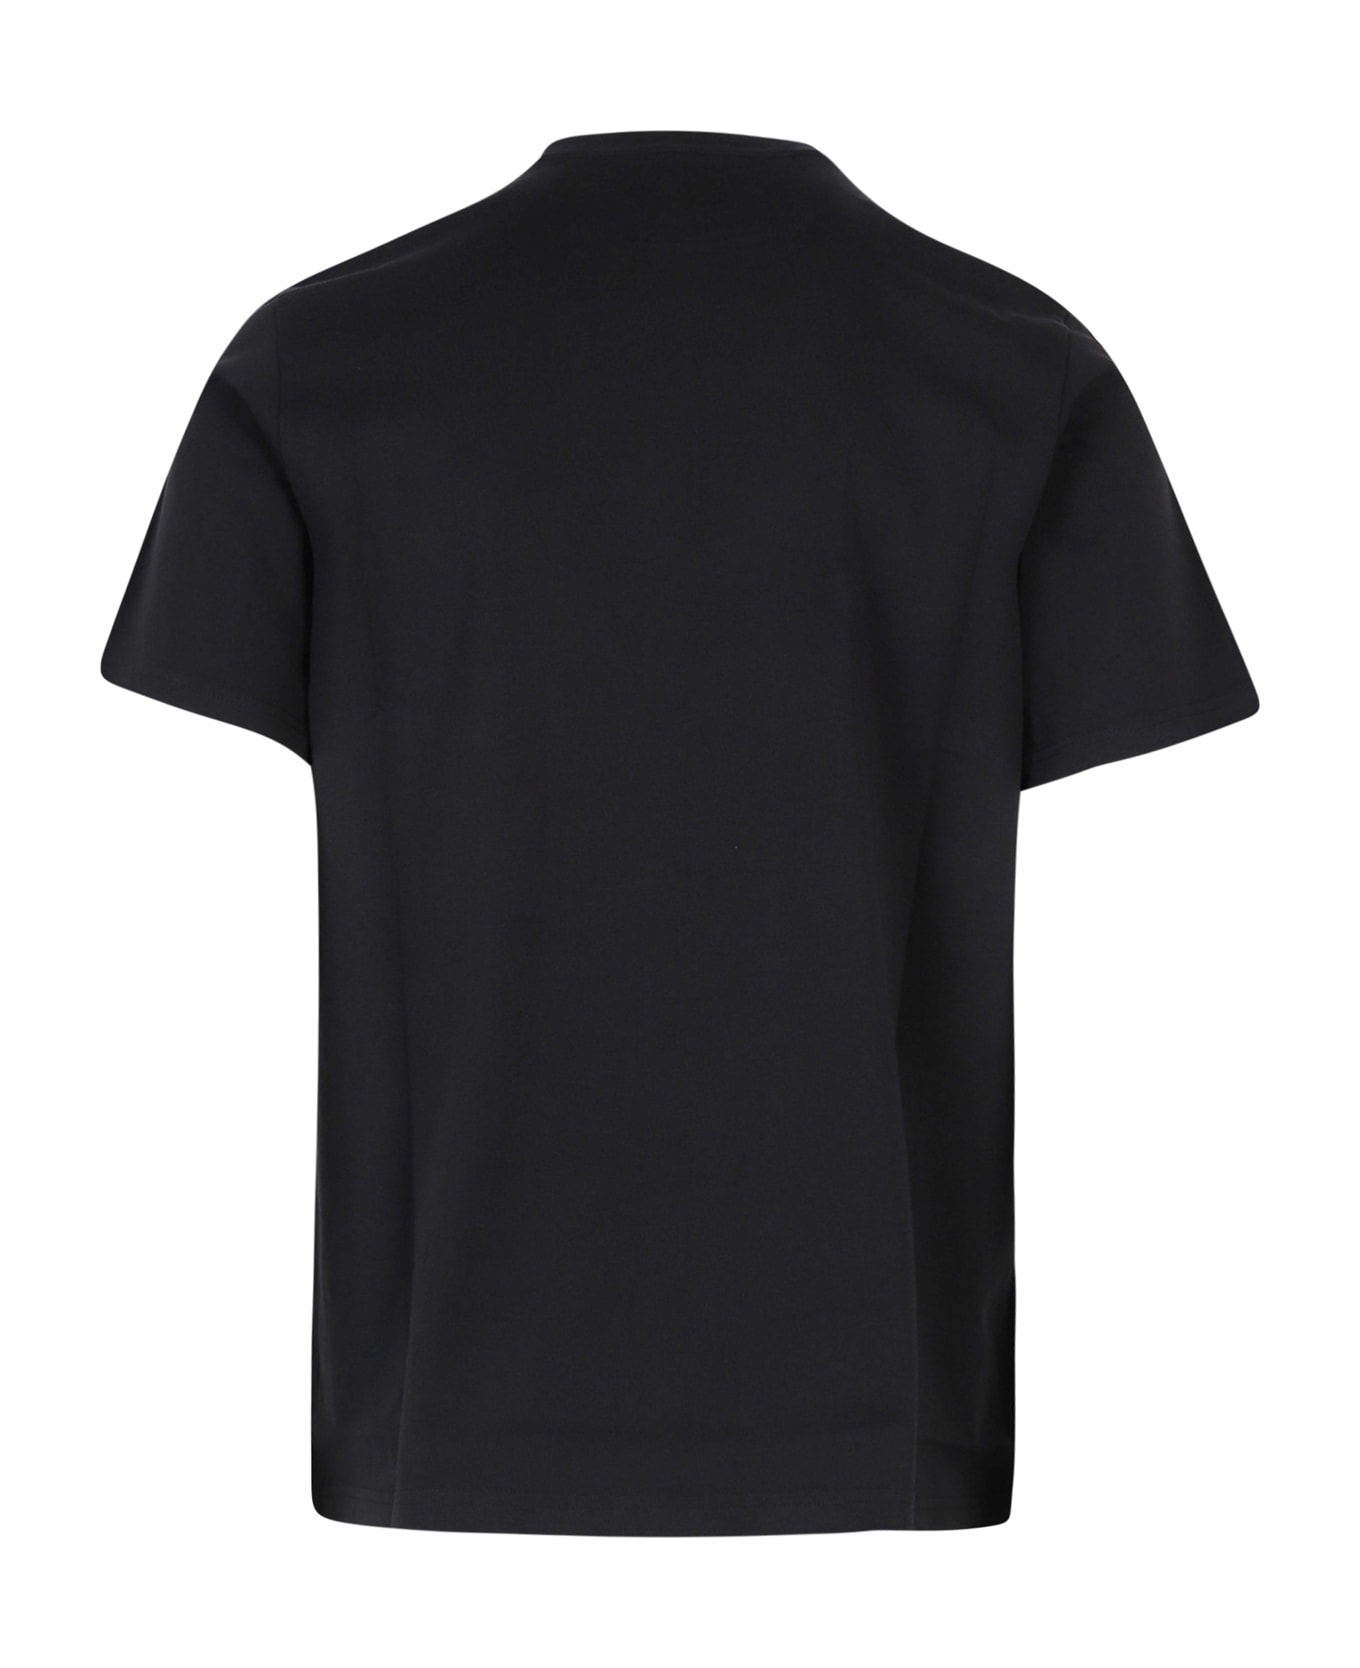 Martine Rose T-shirt - Black